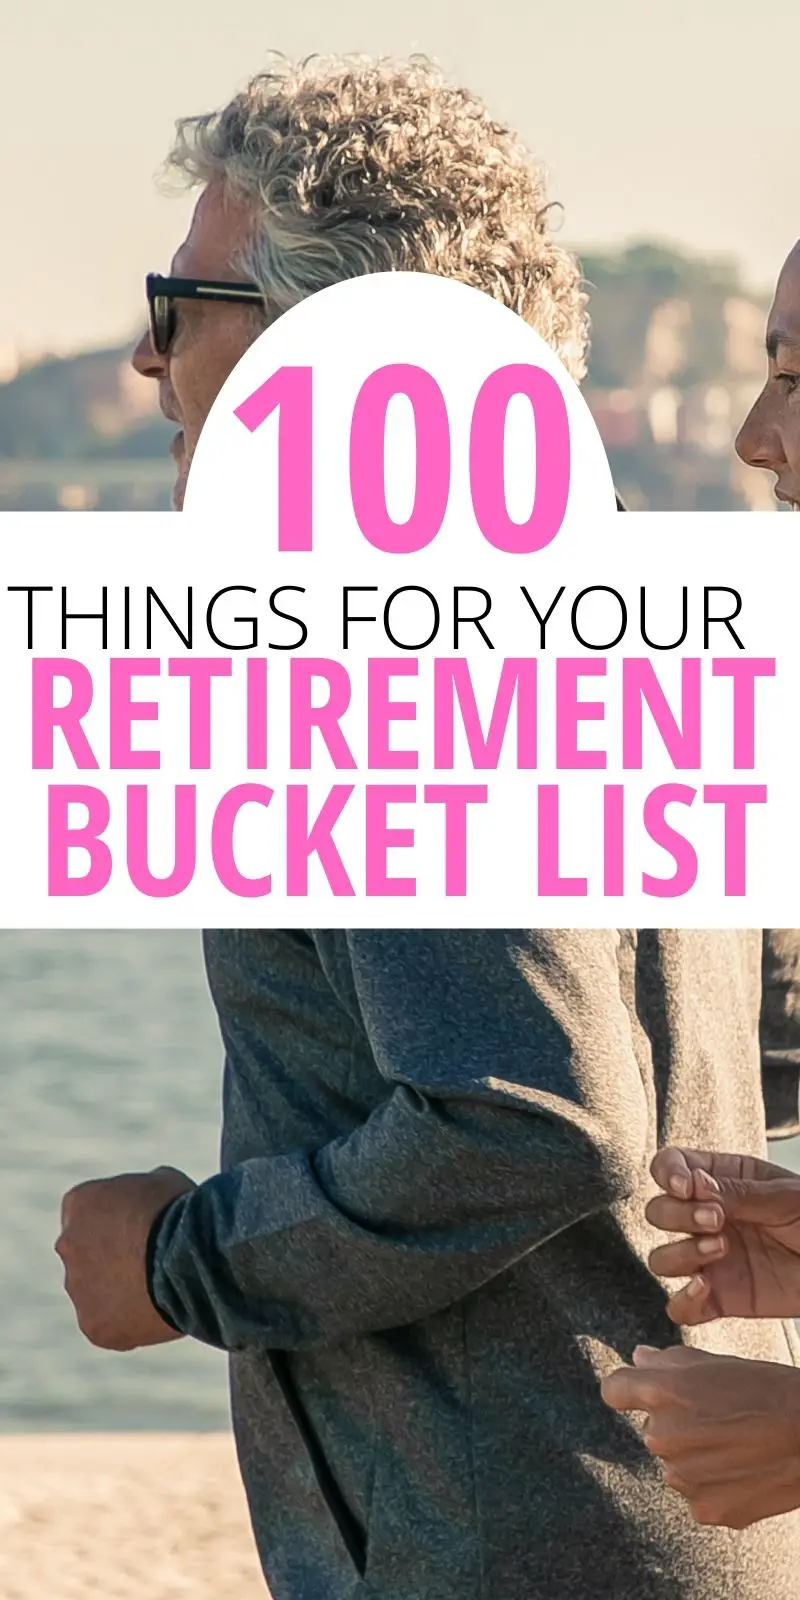 100 Retirement Bucket List Ideas